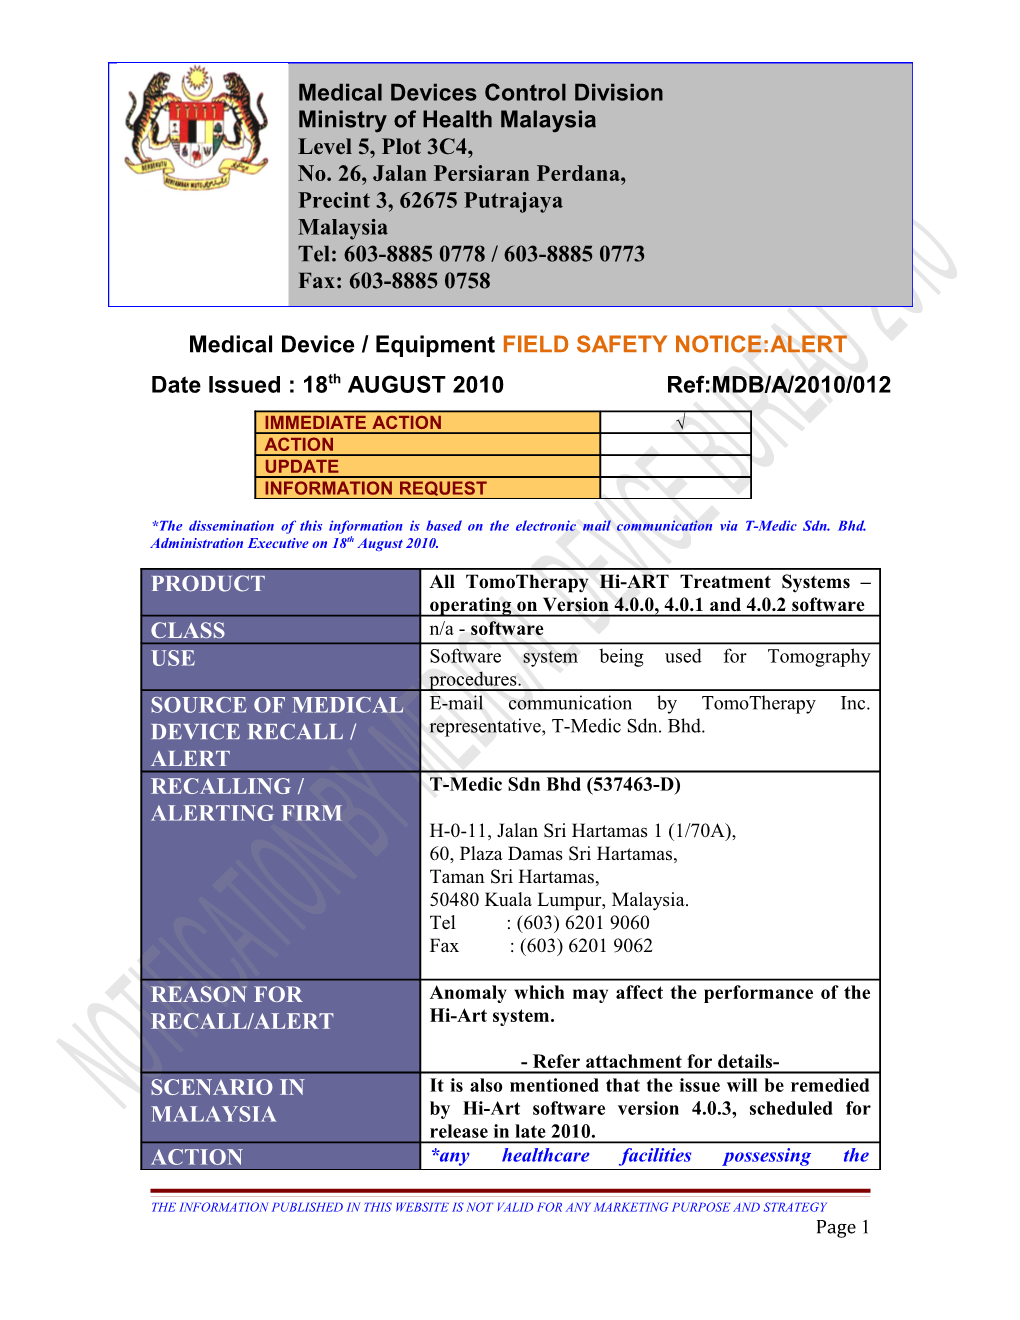 Medical Device / Equipmentfield SAFETY NOTICE:ALERT